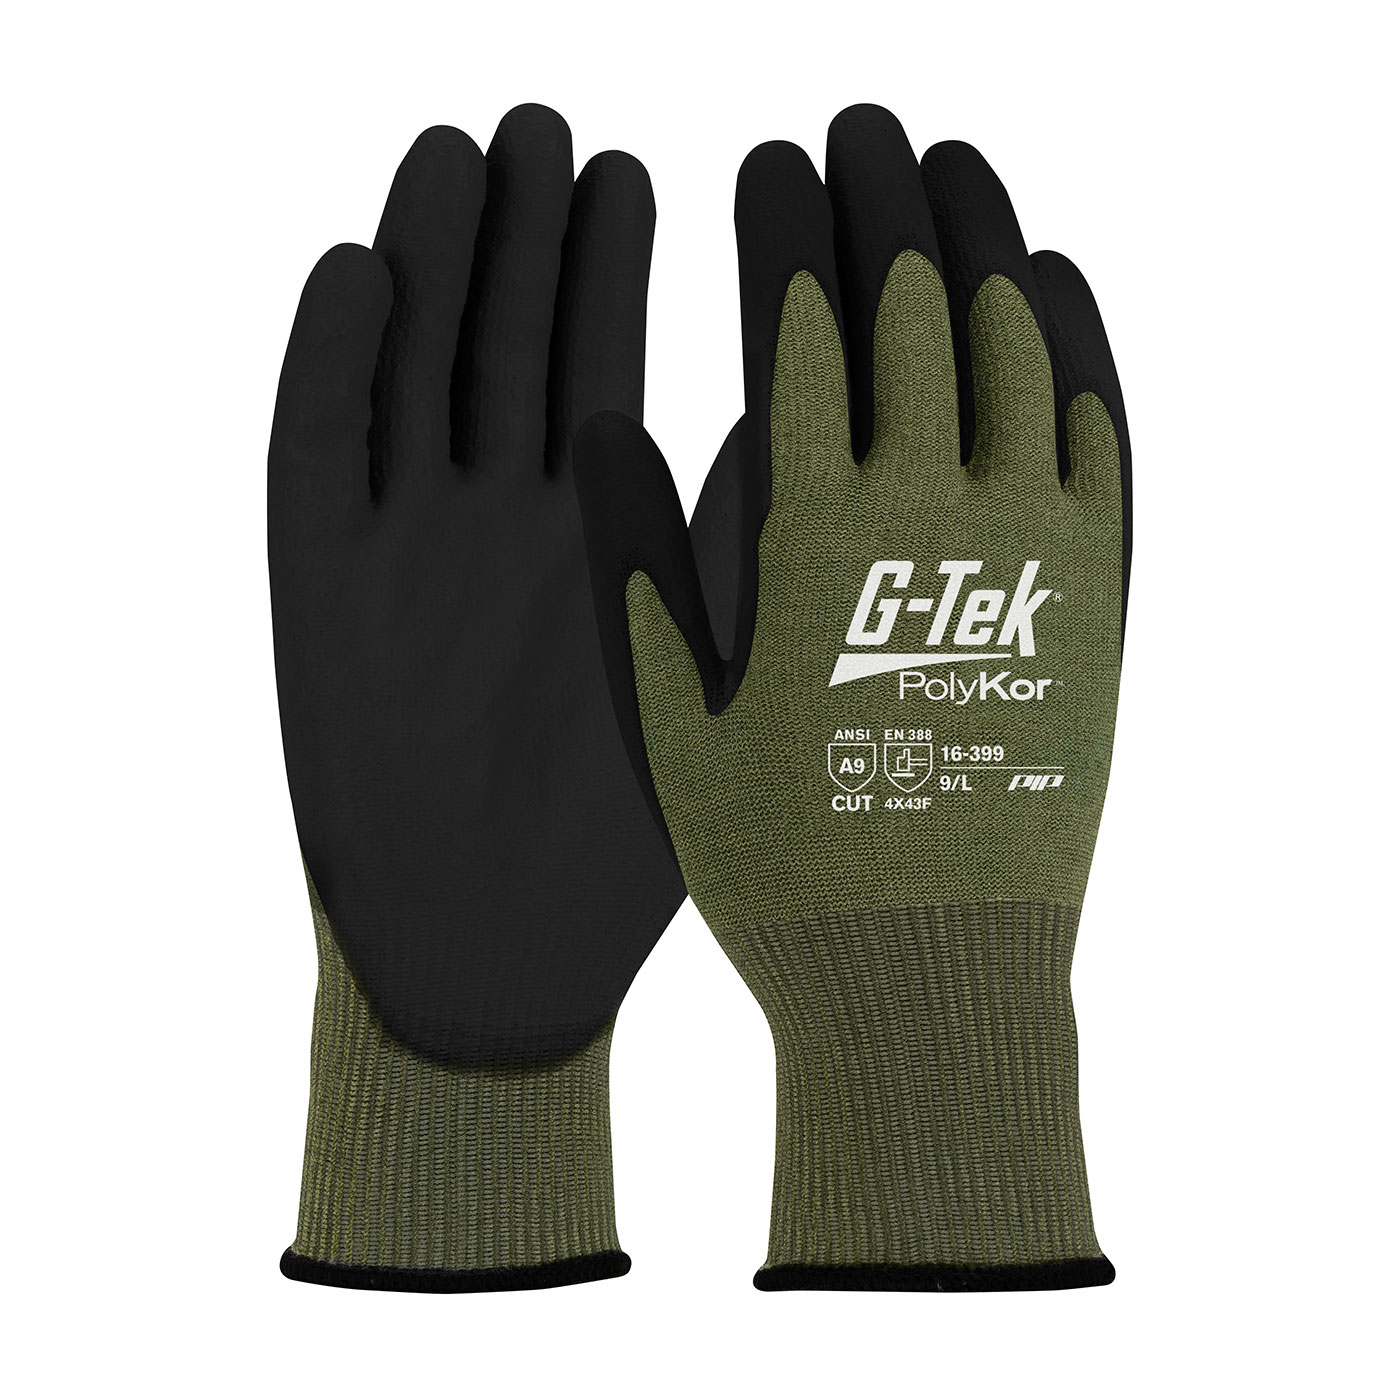 16-399 PIP®G-Tek®PolyKor®X7™无缝针织X7™混合手套与NeoFoam®涂层微表面握把手掌和手指-触摸屏兼容